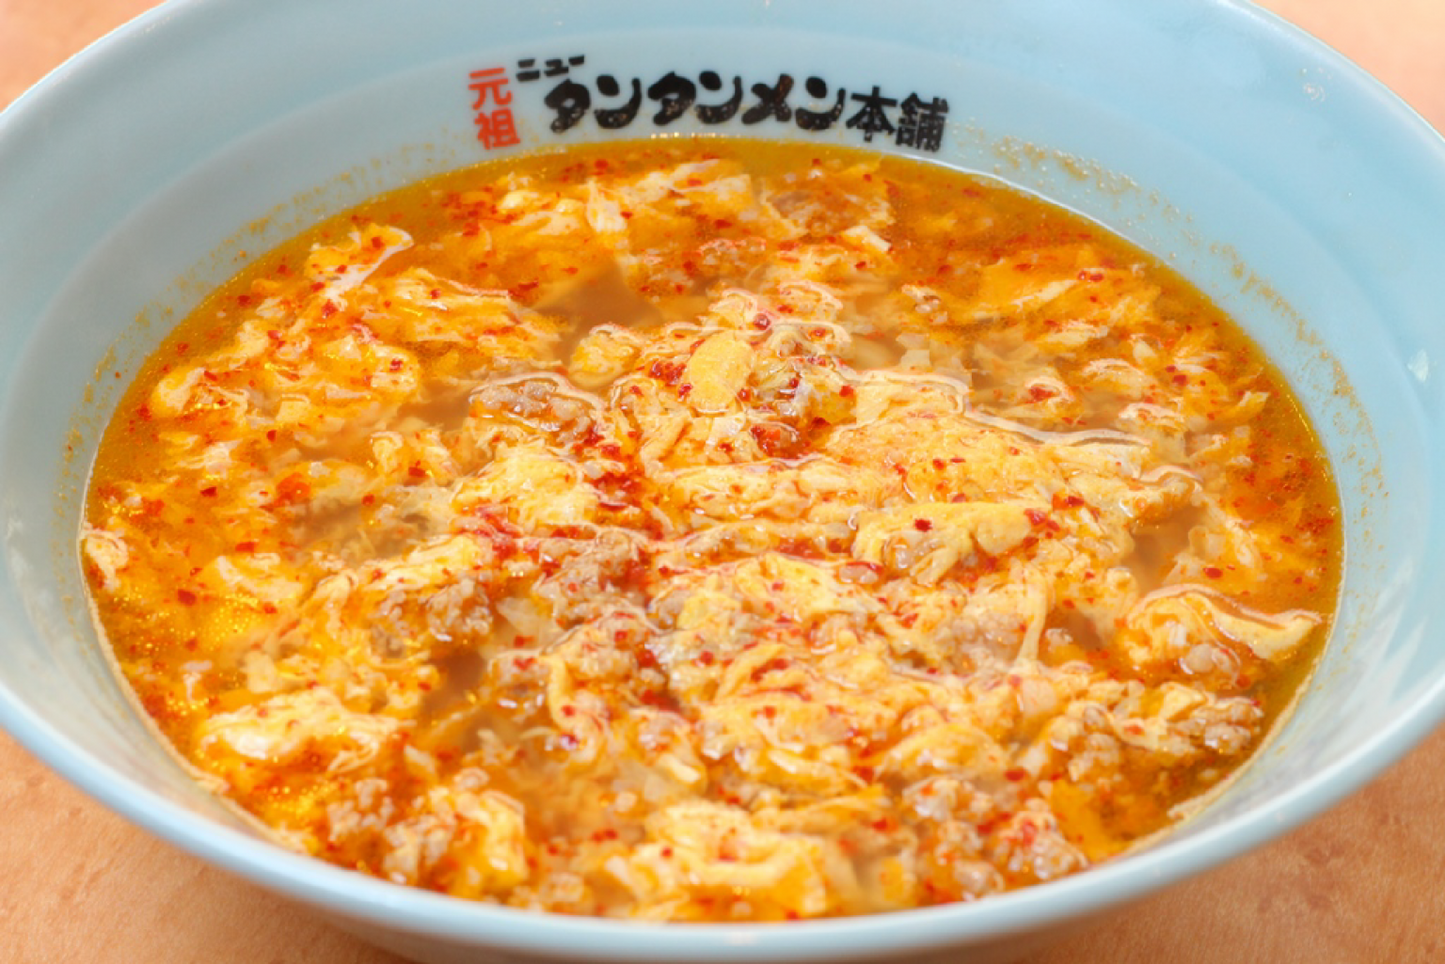 Japanese Noodles Dandan Ramen Tantan Spicy Pork Instant Cup Food Soup Sanyo 94g